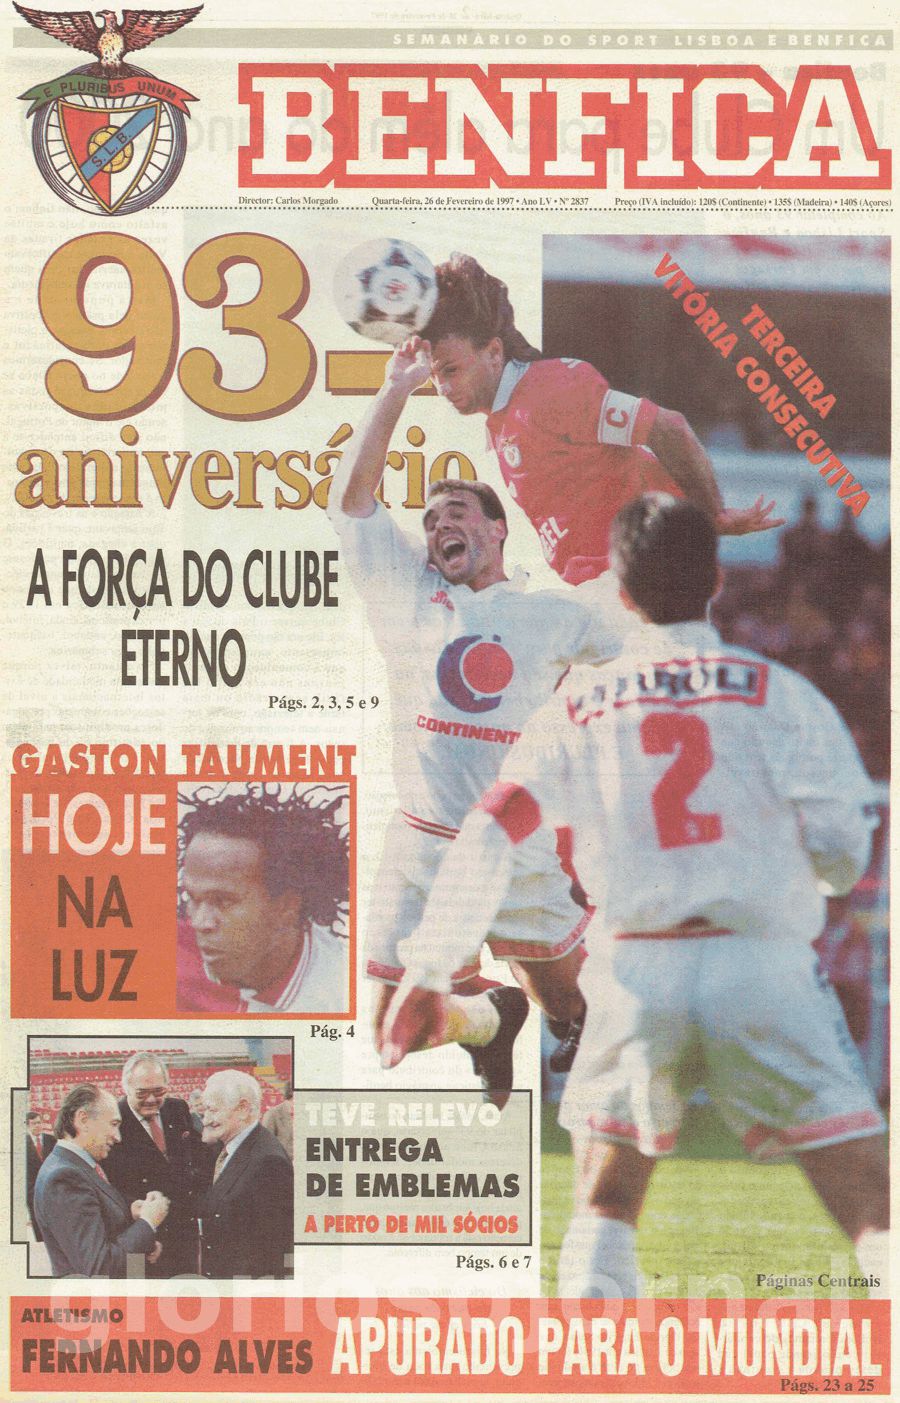 jornal o benfica 2837 1997-02-26